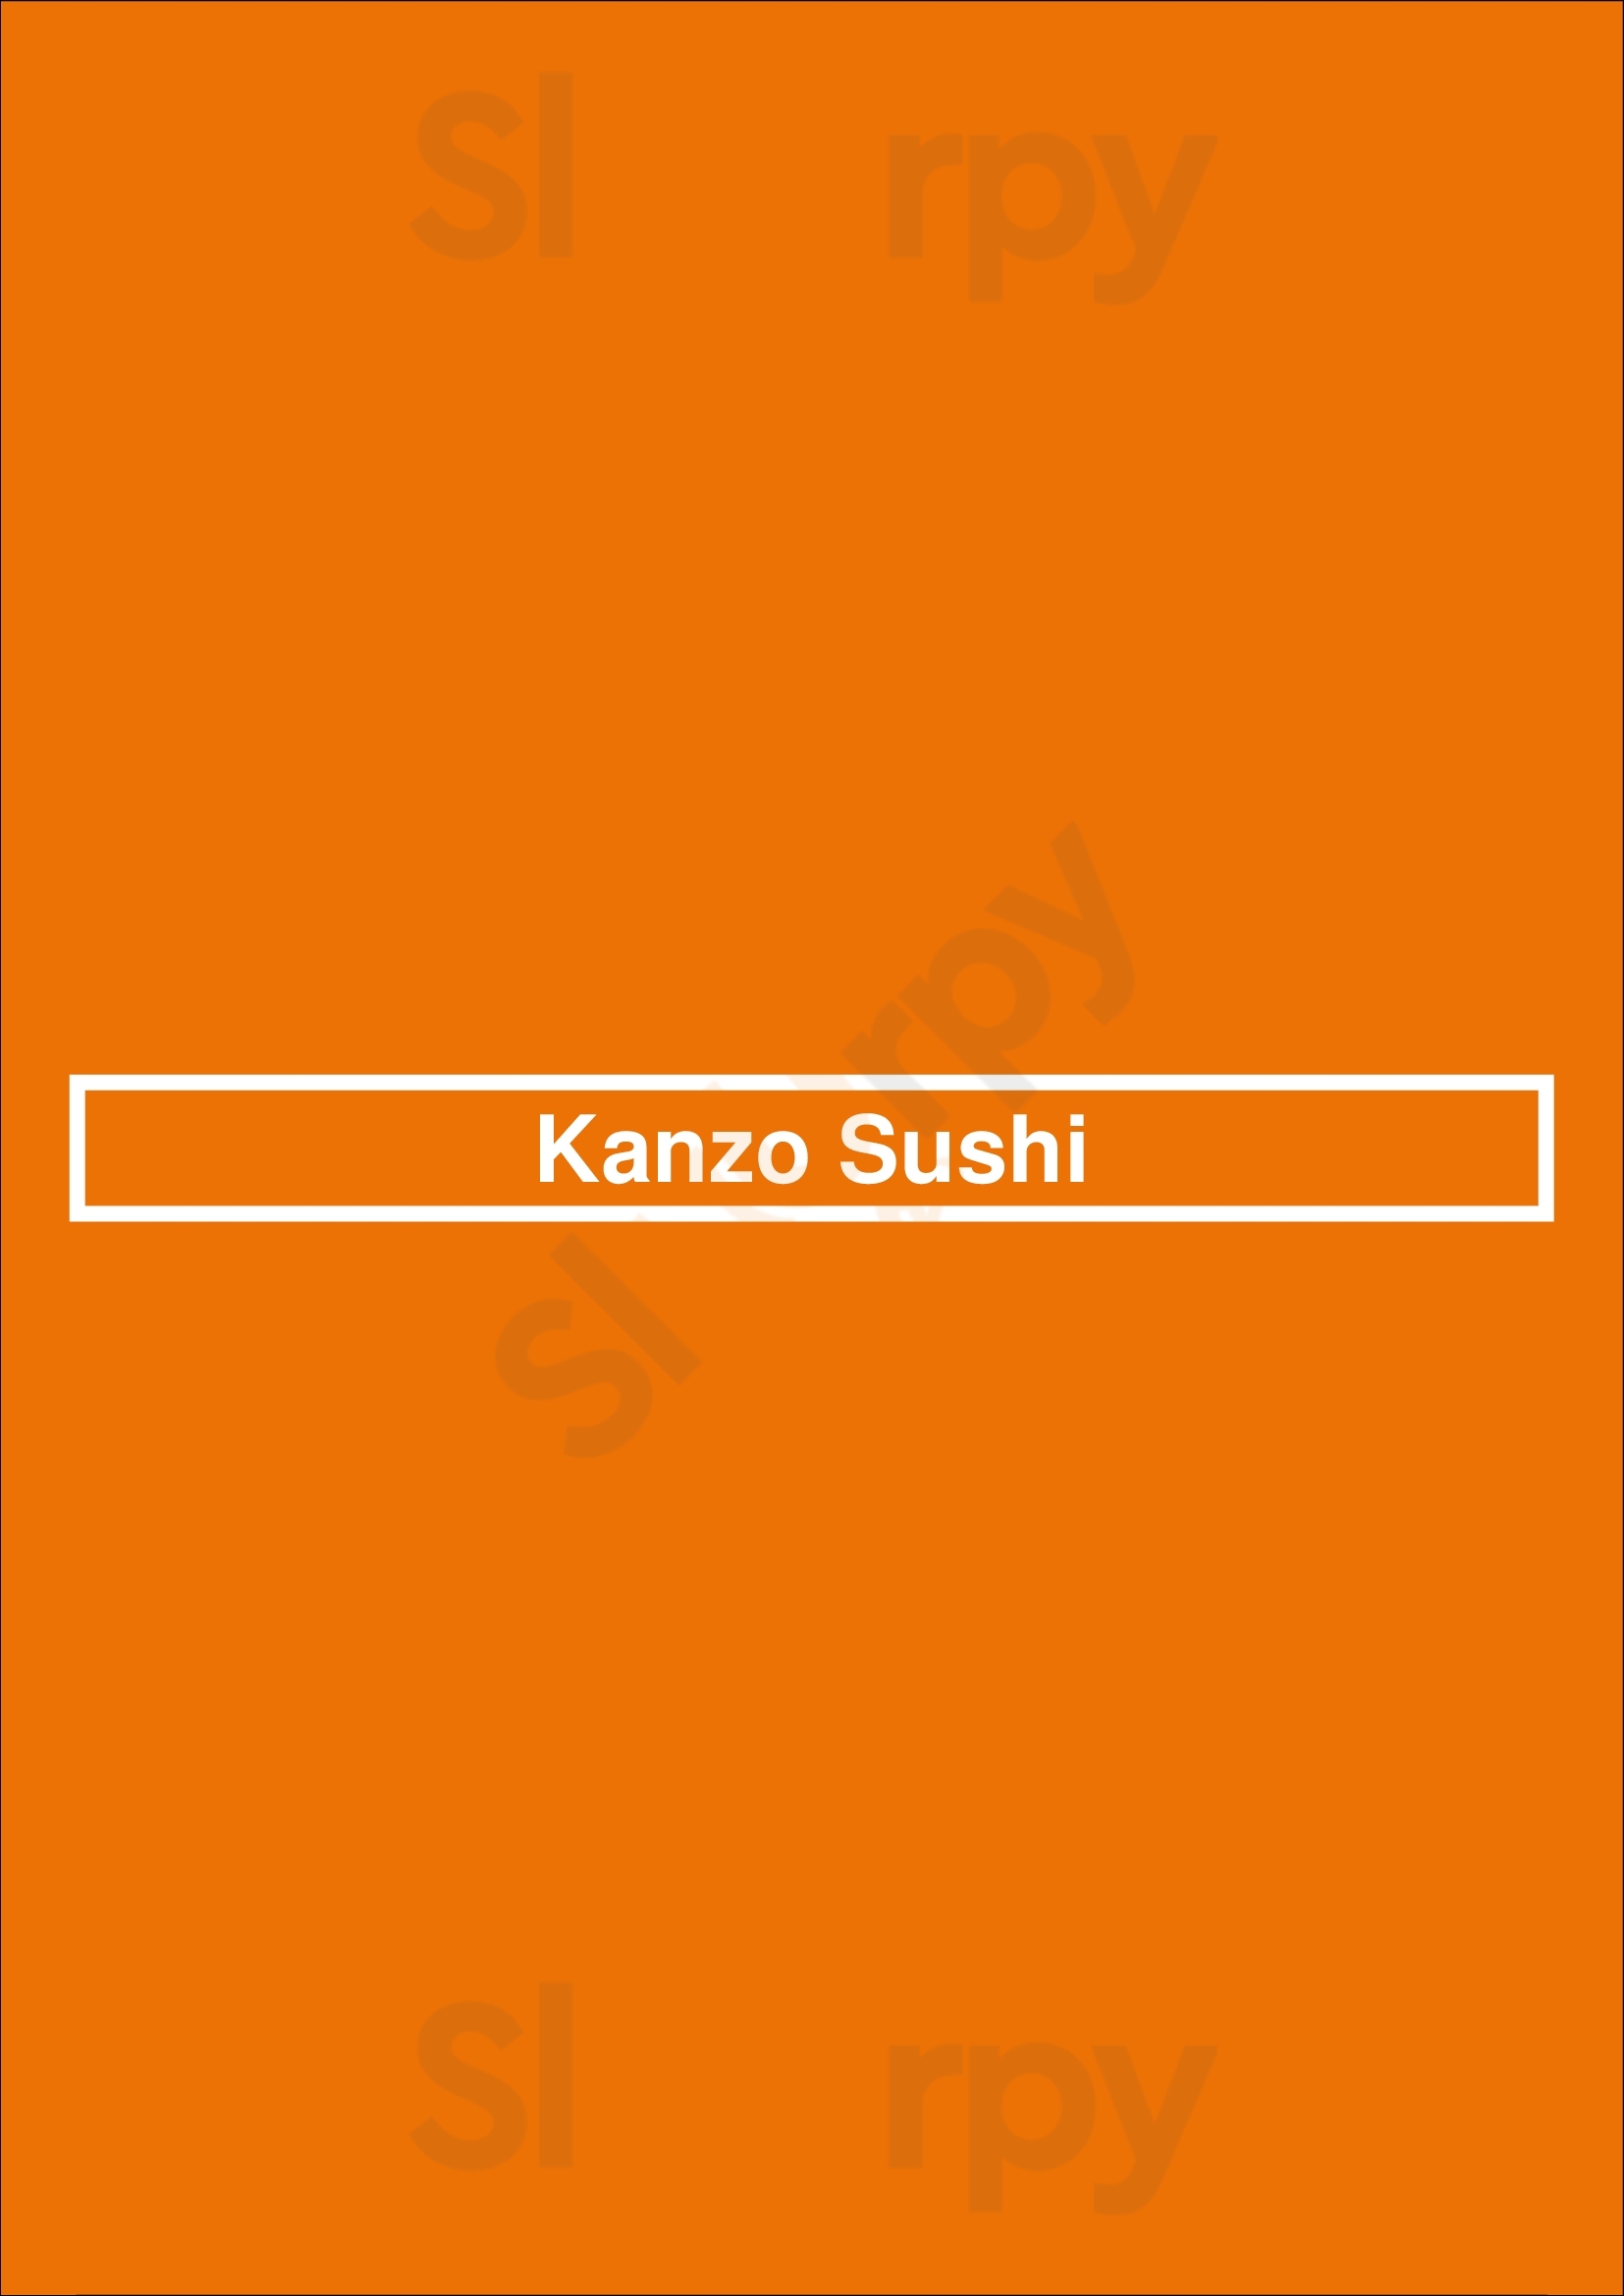 Kanzo Sushi Vancouver Menu - 1